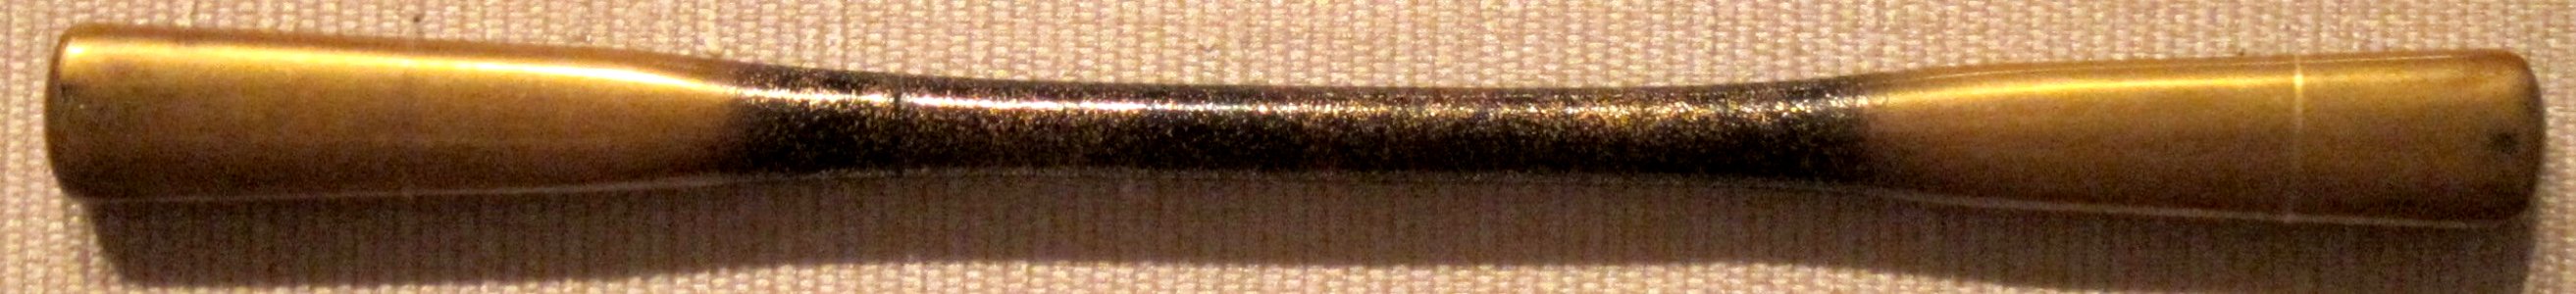 Japanese hair pin, black and gold lacquer, Edo or Taisho, Honolulu Museum of Art I